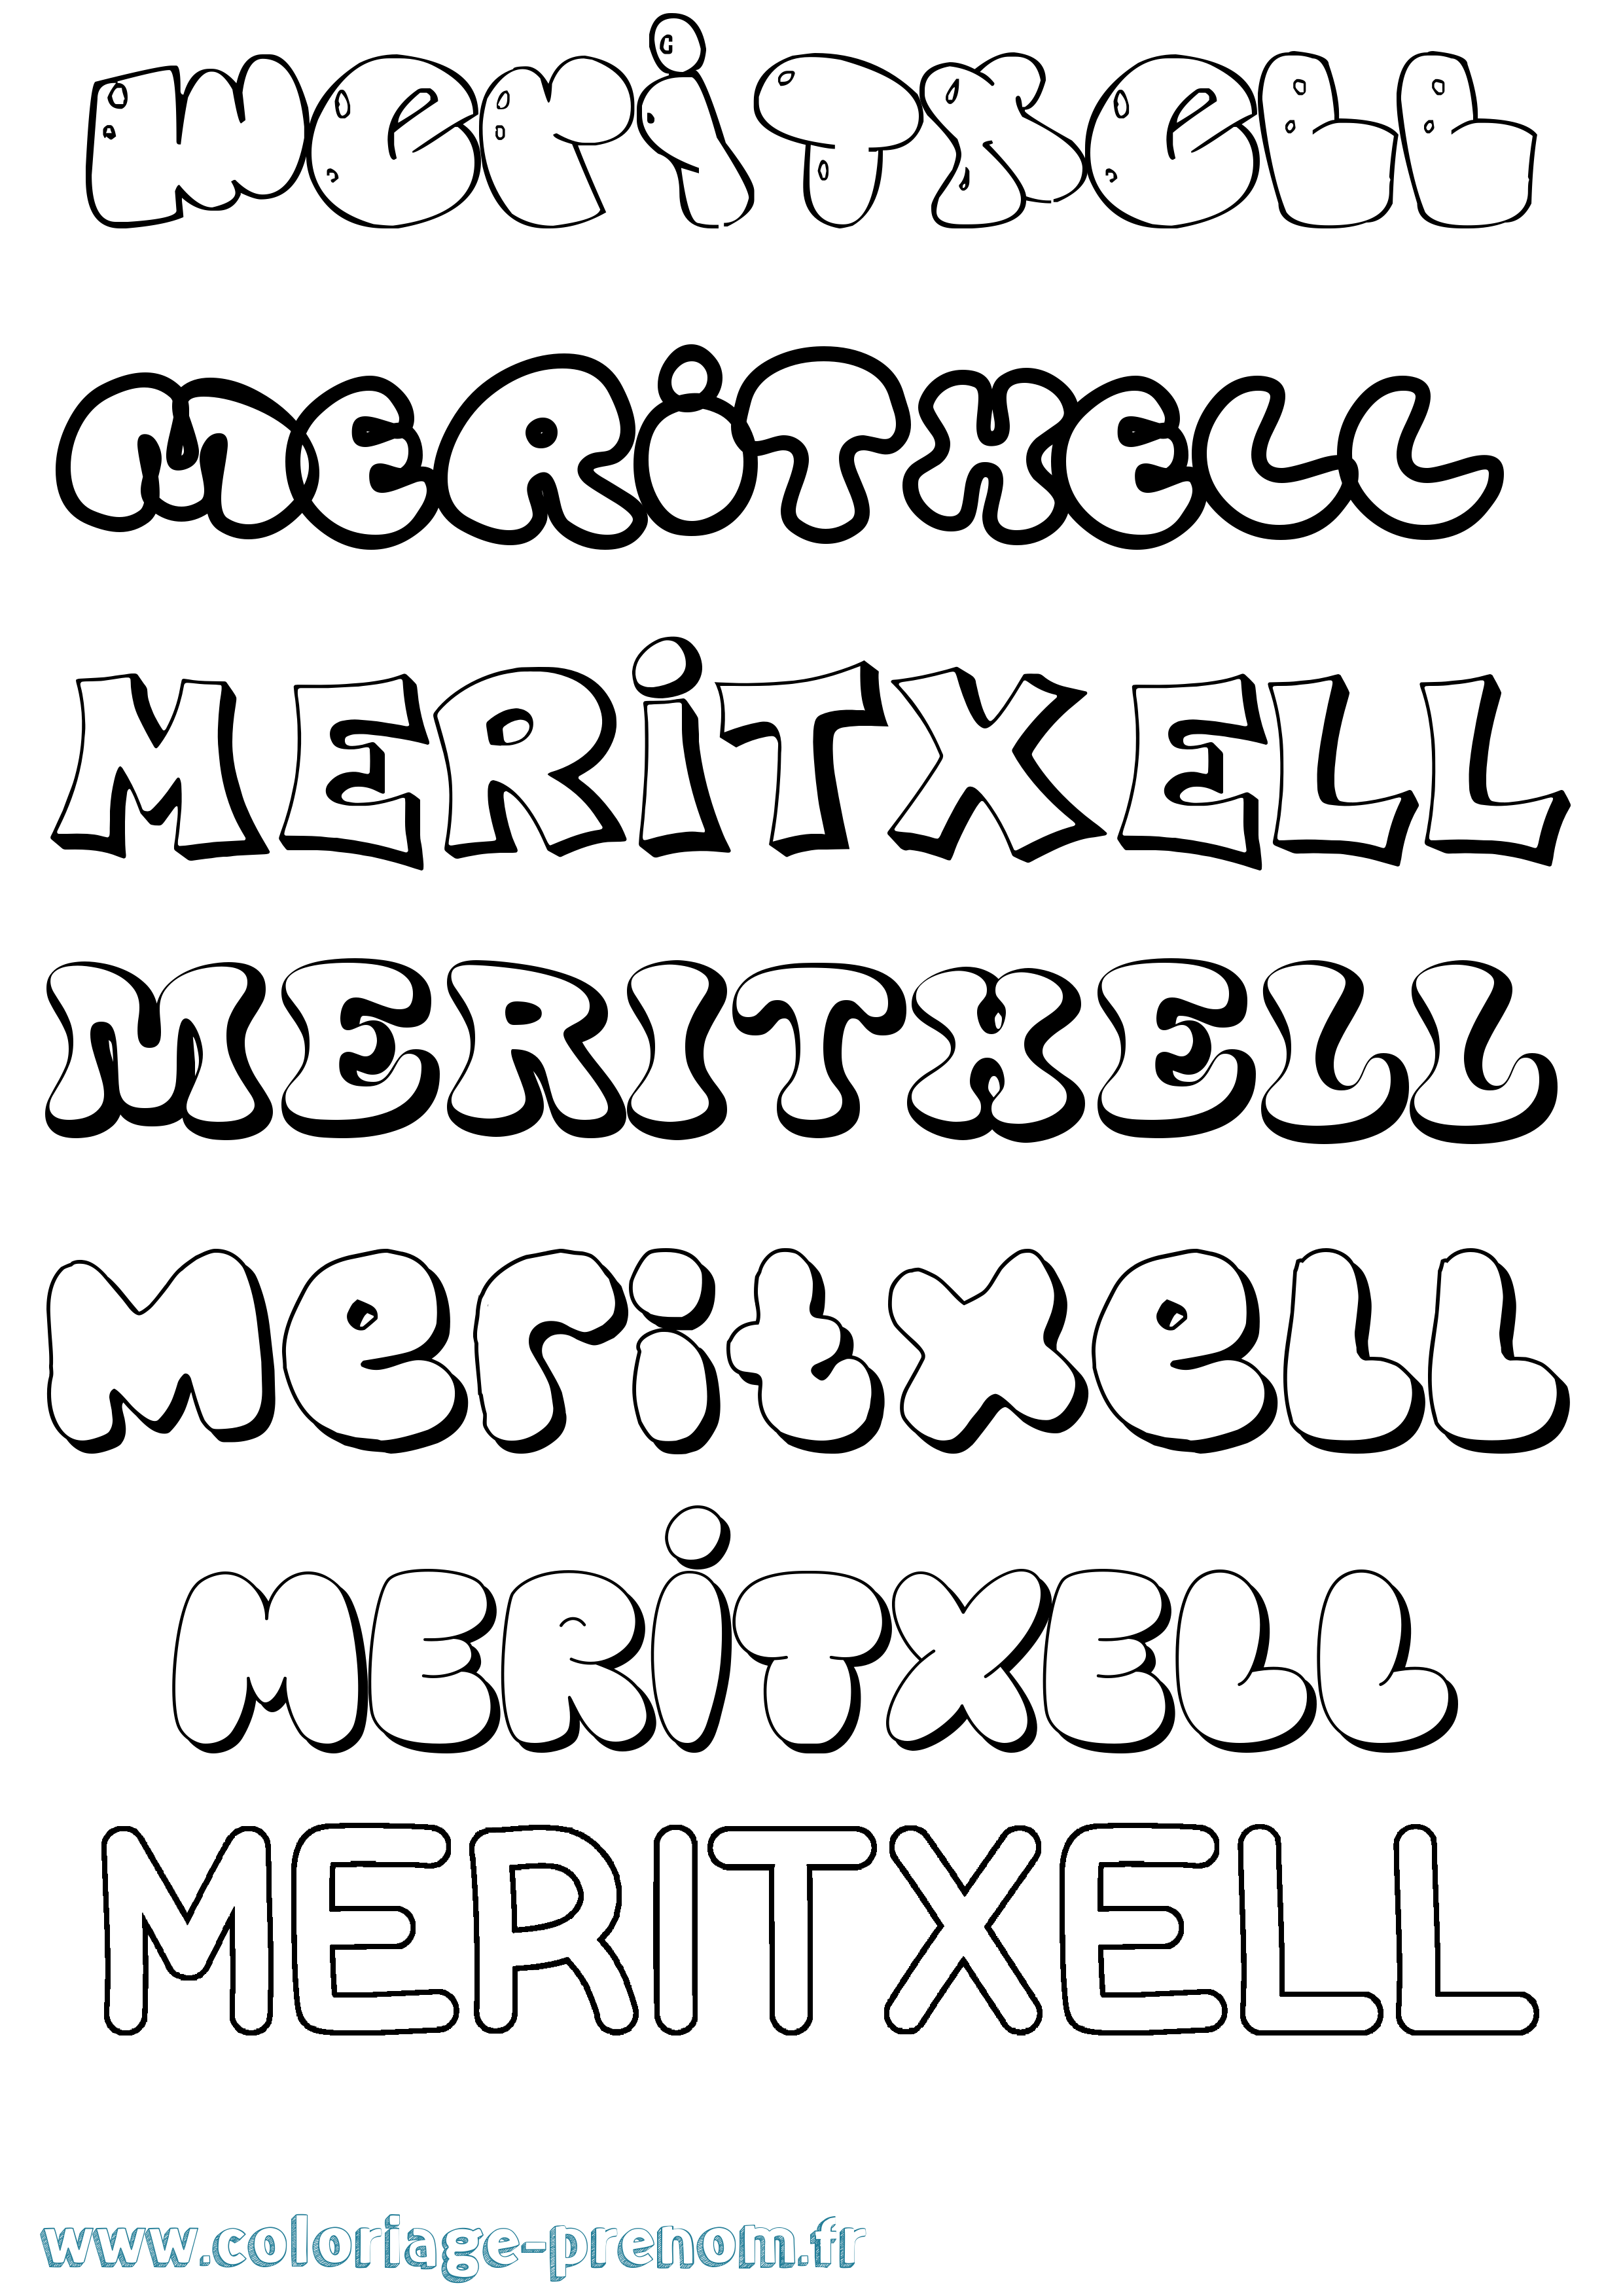 Coloriage prénom Meritxell Bubble